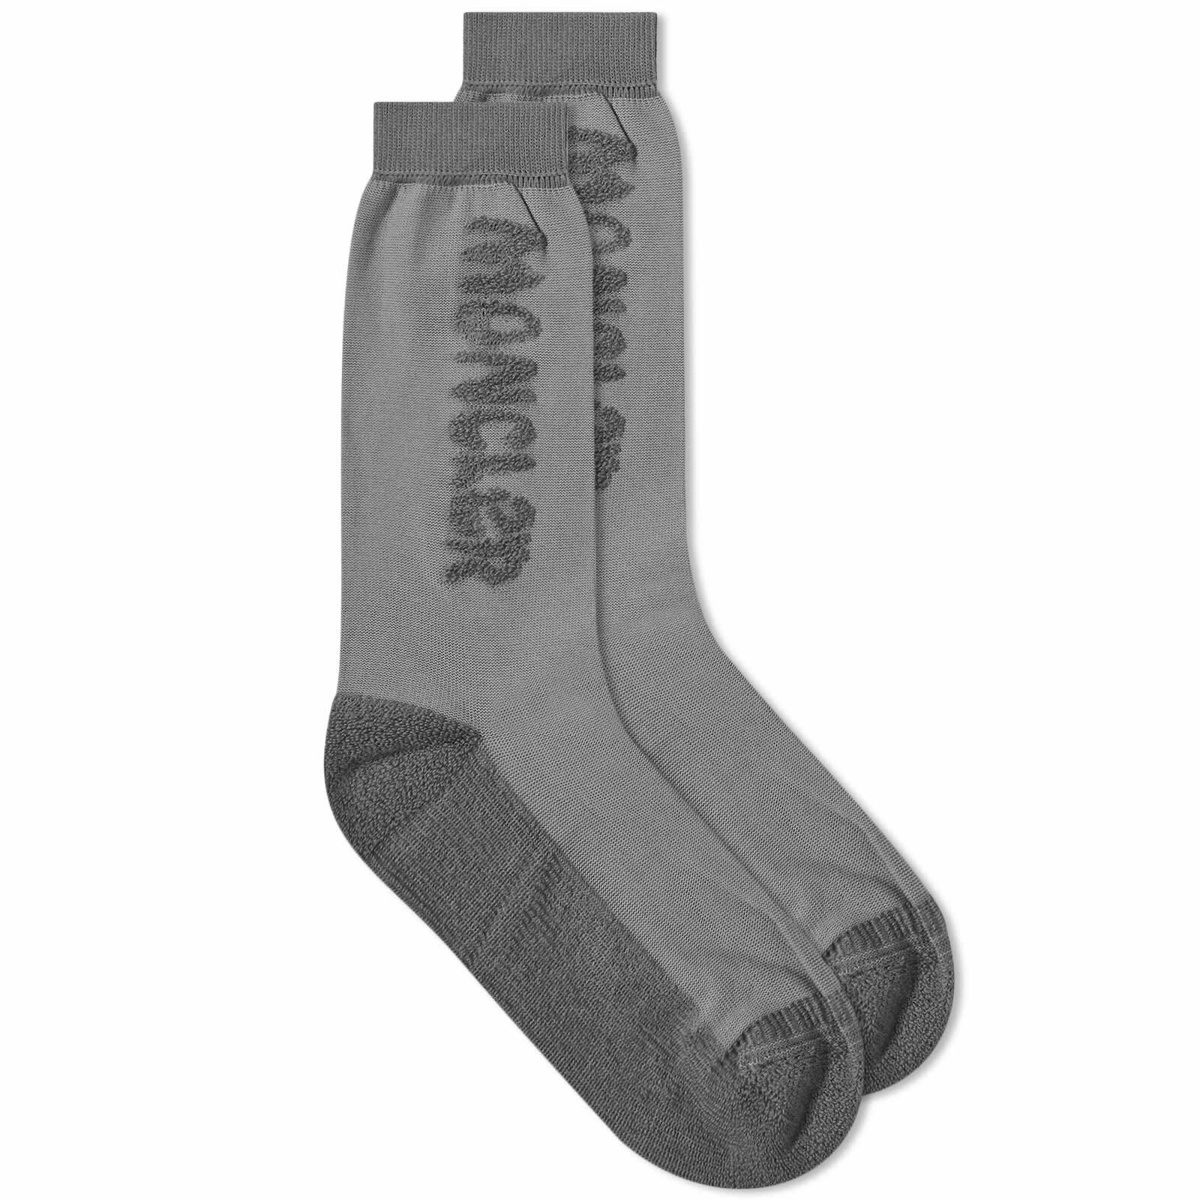 Moncler Genius x Salehe Bembury Socks in Grey Moncler